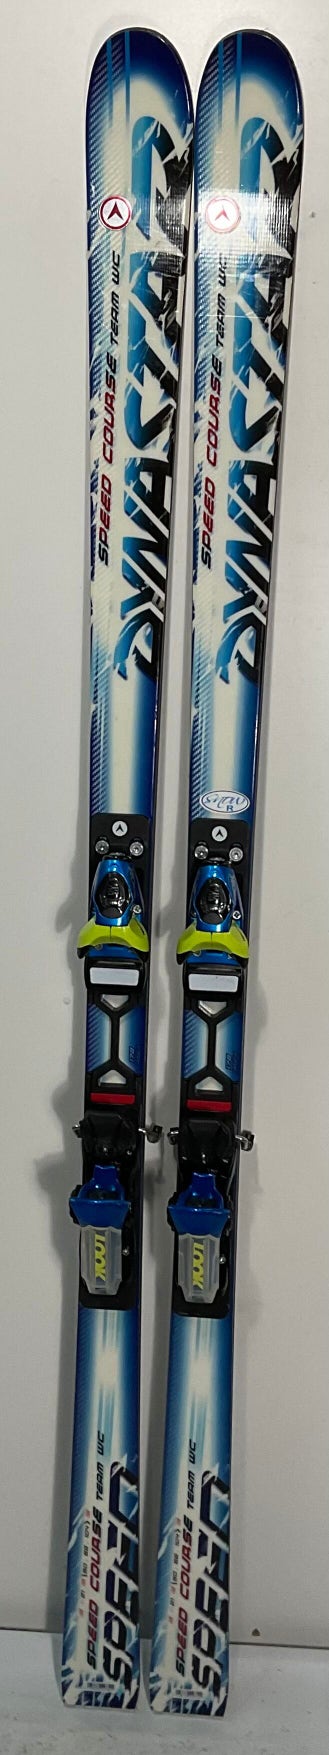 Used Dynastar Racing WC Speed Course Team 178cm Skis With Look PX Team 10 Bindings (453B)